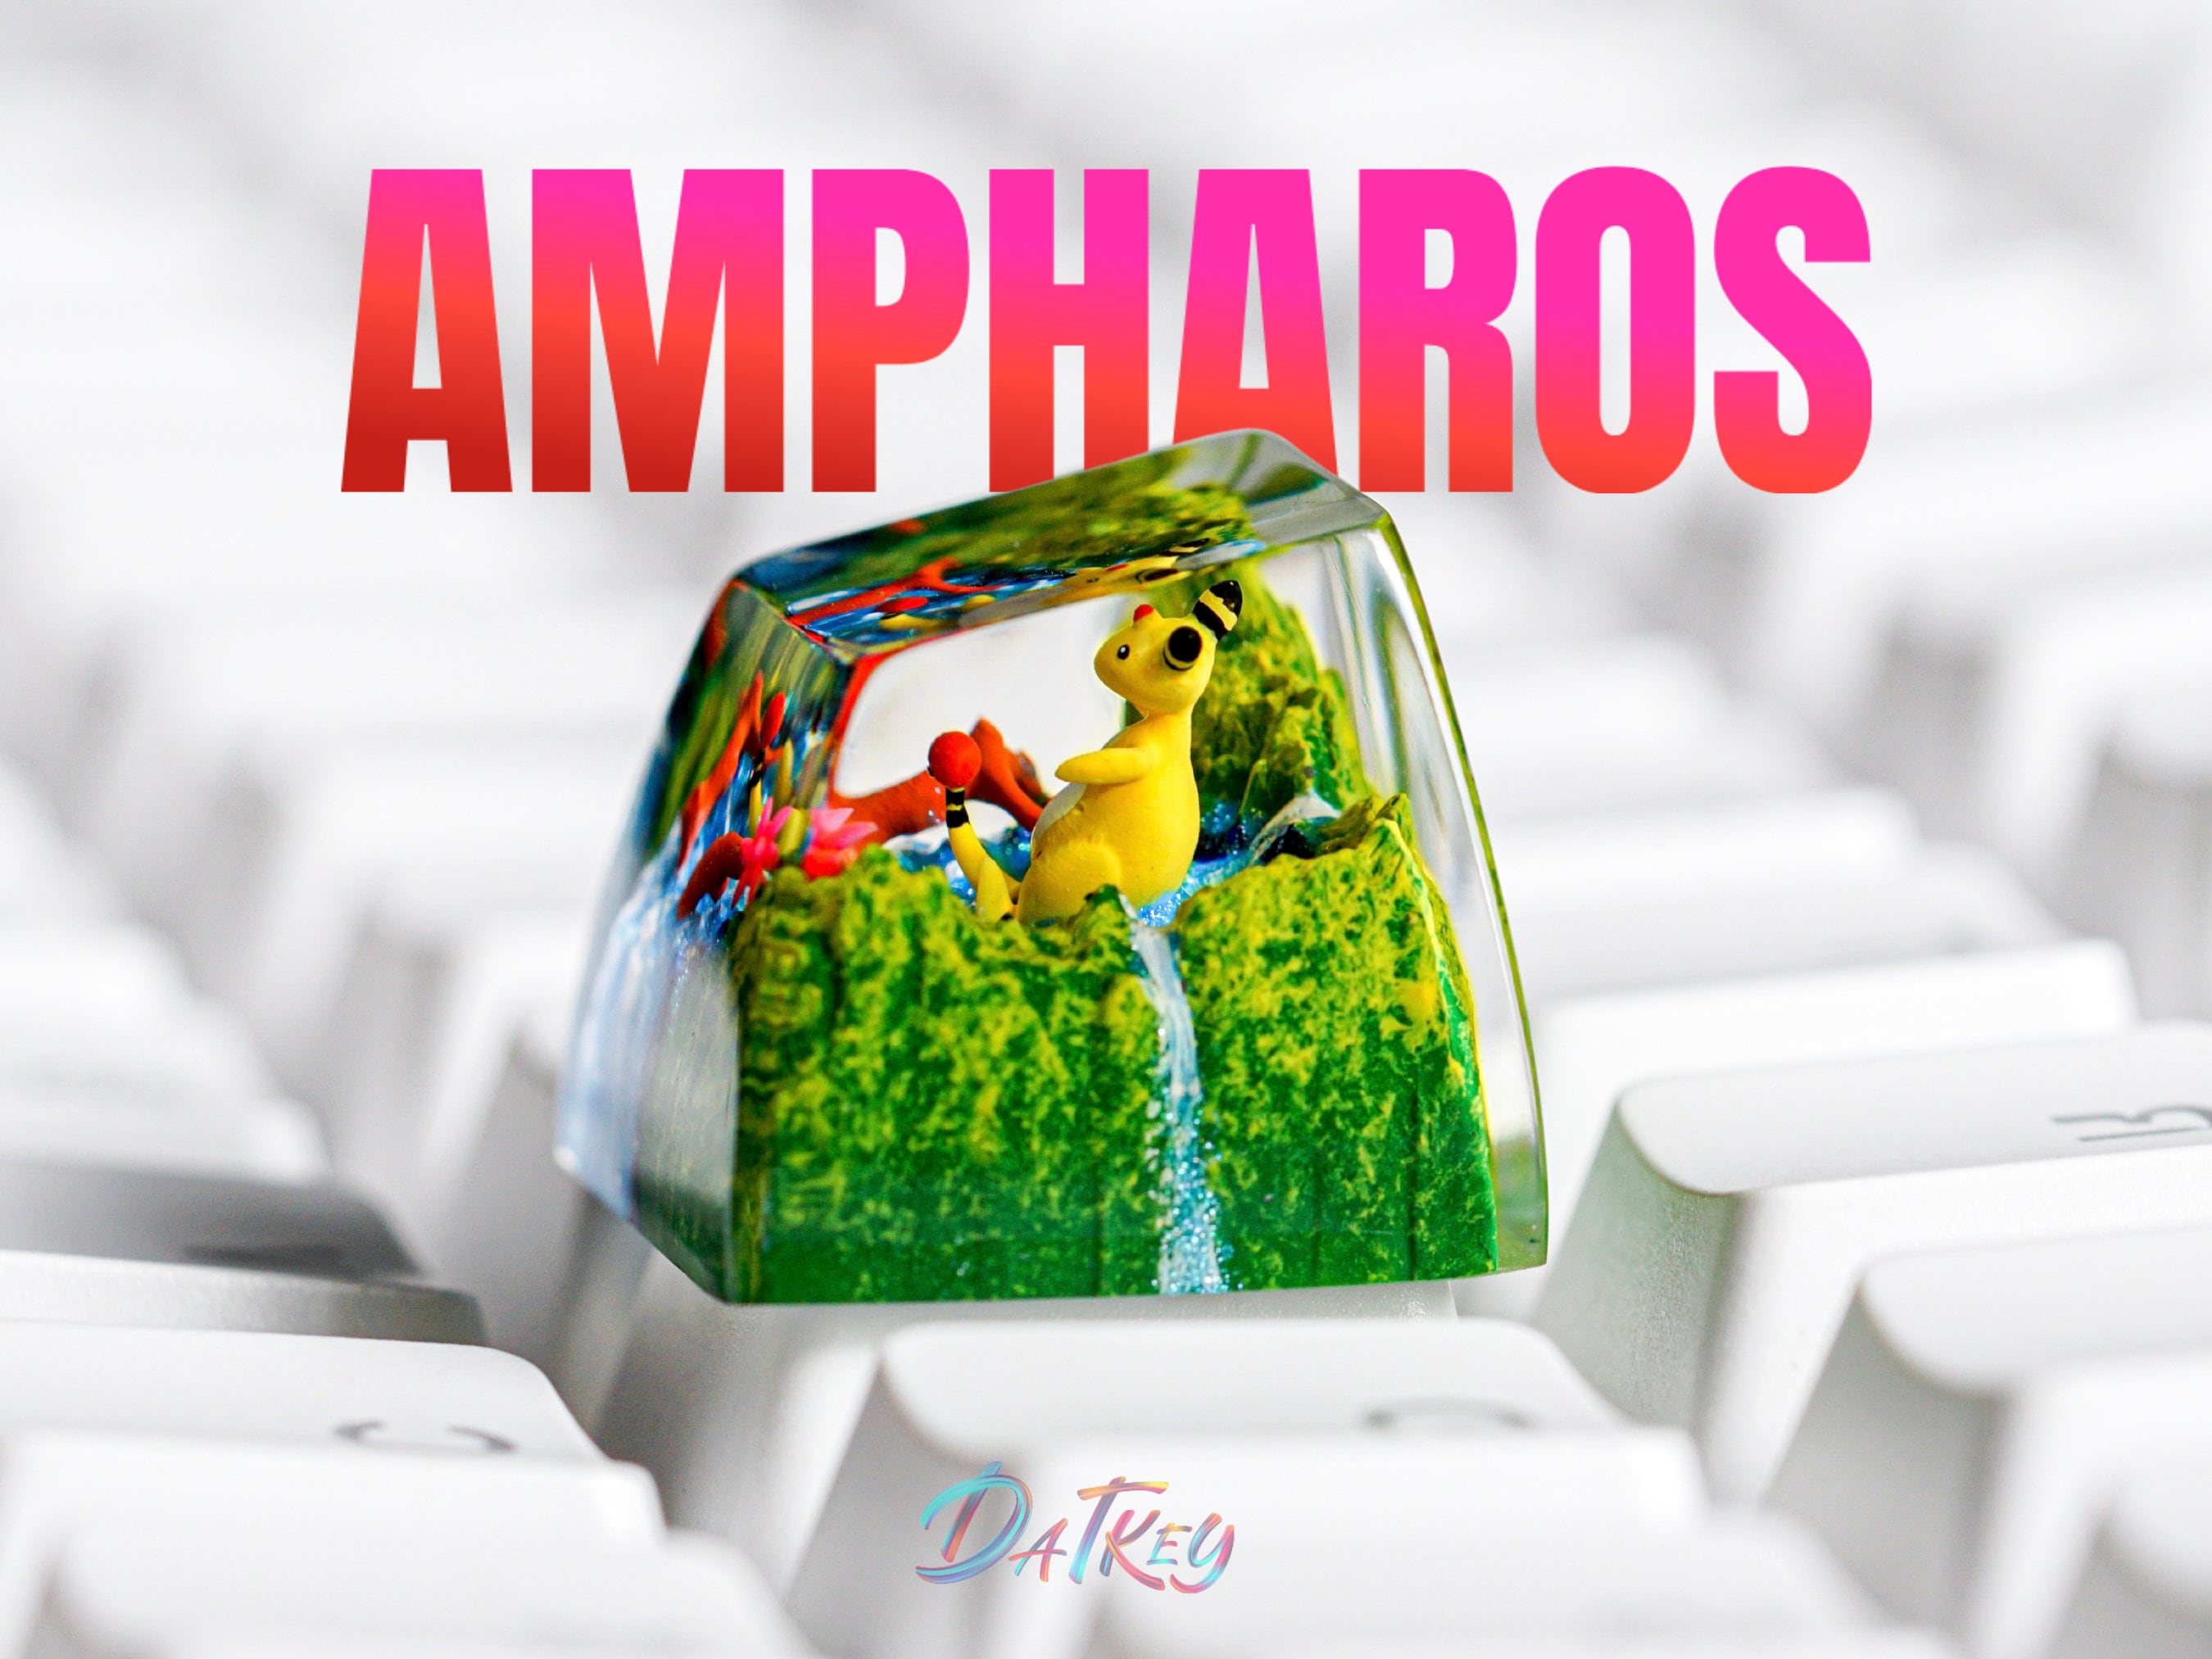 Ampharos Keycap, Pokemon Keycap, Artisan Keycap, Esc Keycap, Keycap for MX Cherry Switches Keyboard, Handmade Gift